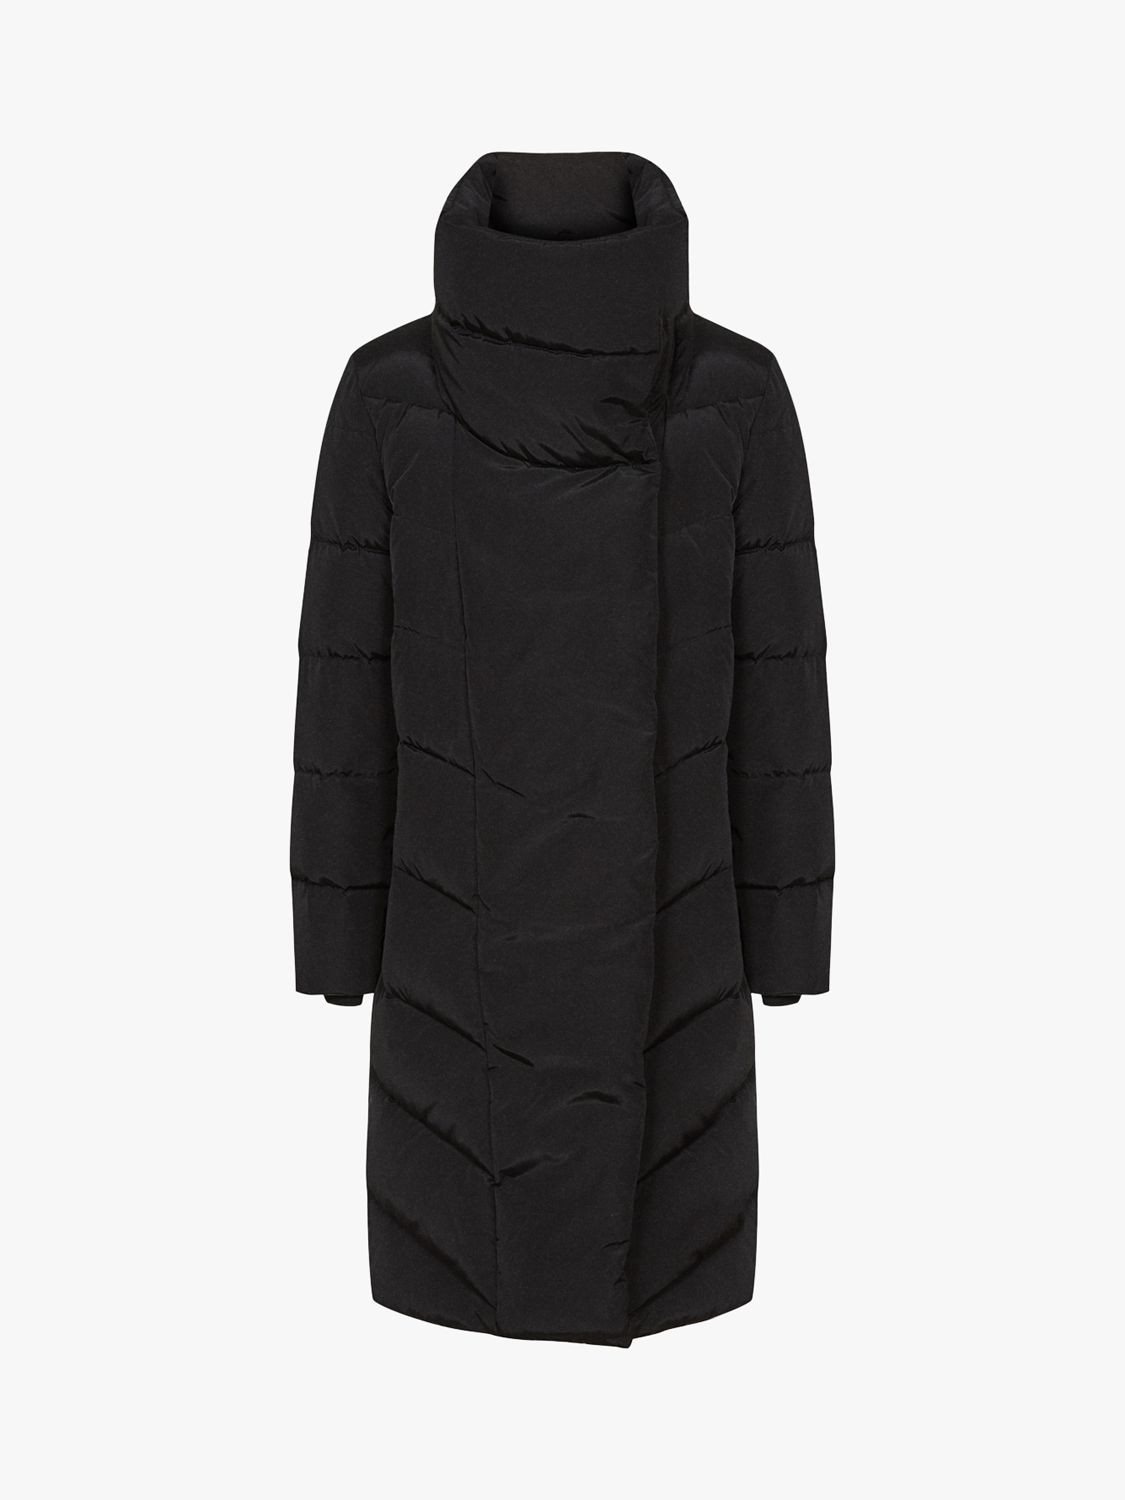 Reiss Lora Puffer Coat, Black